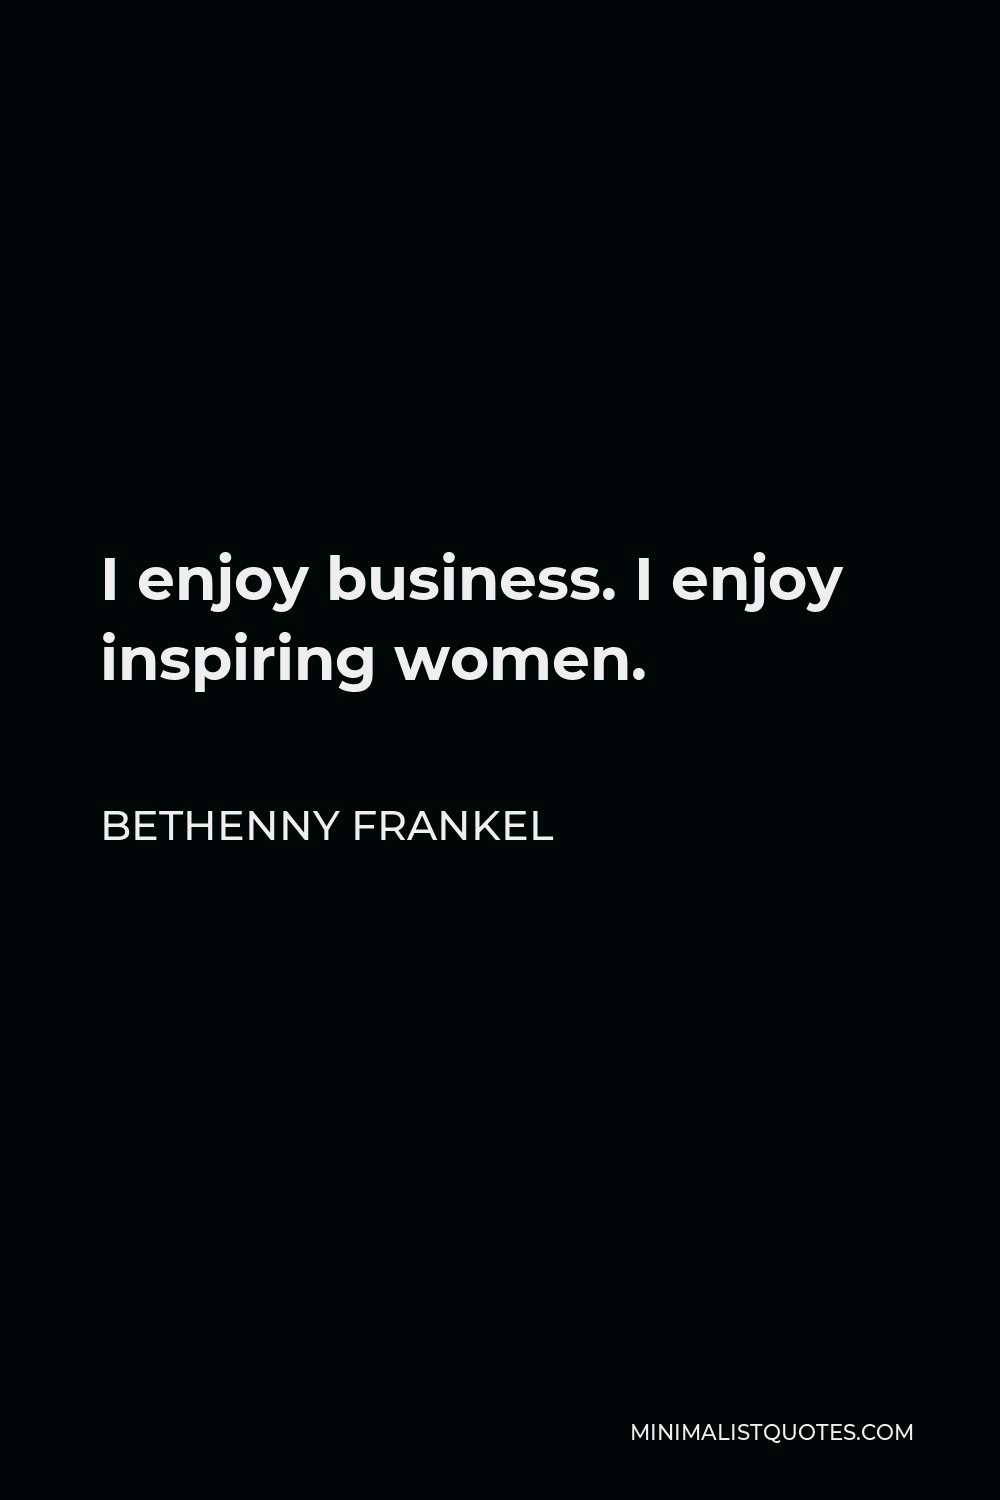 Bethenny Frankel Quote - I enjoy business. I enjoy inspiring women.